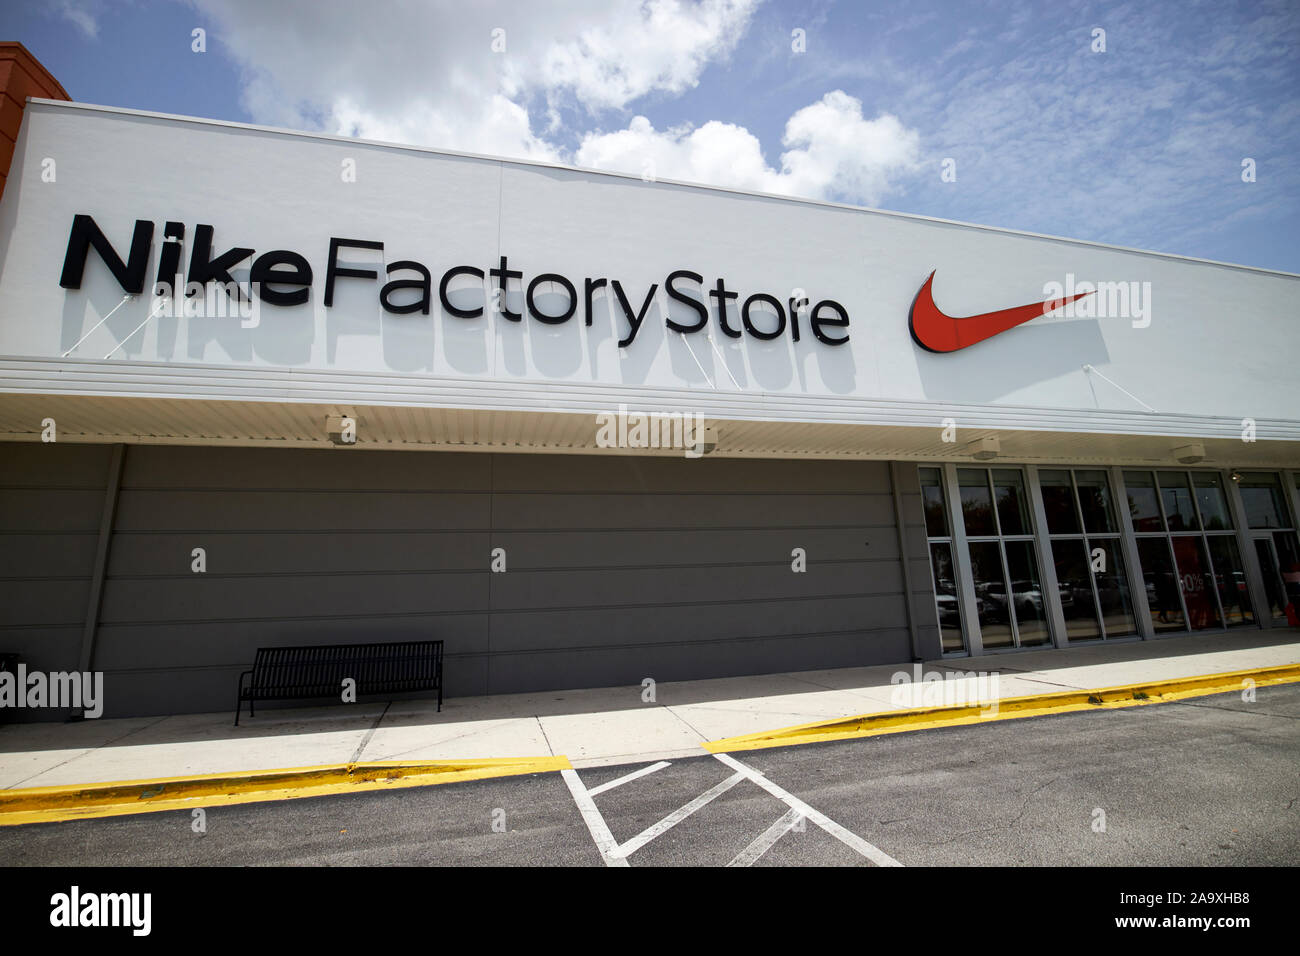 Nike factory store Outlet kissimmee Florida USA Stockfotografie - Alamy